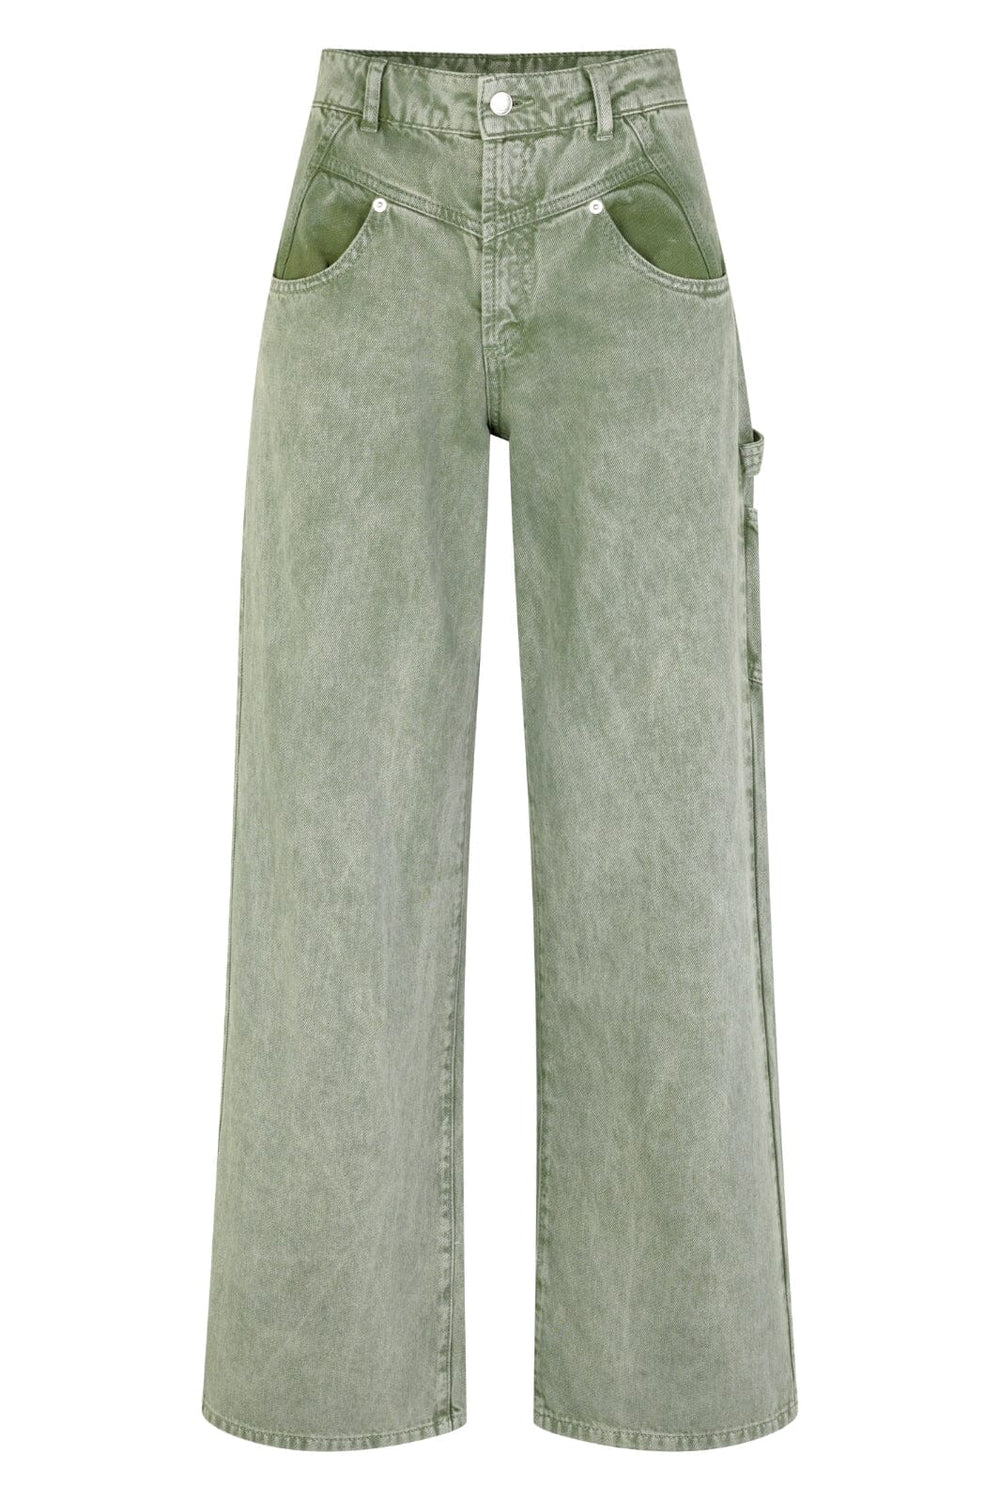 Mbym - Purora-M - P37 Iguana Green Wash Jeans 